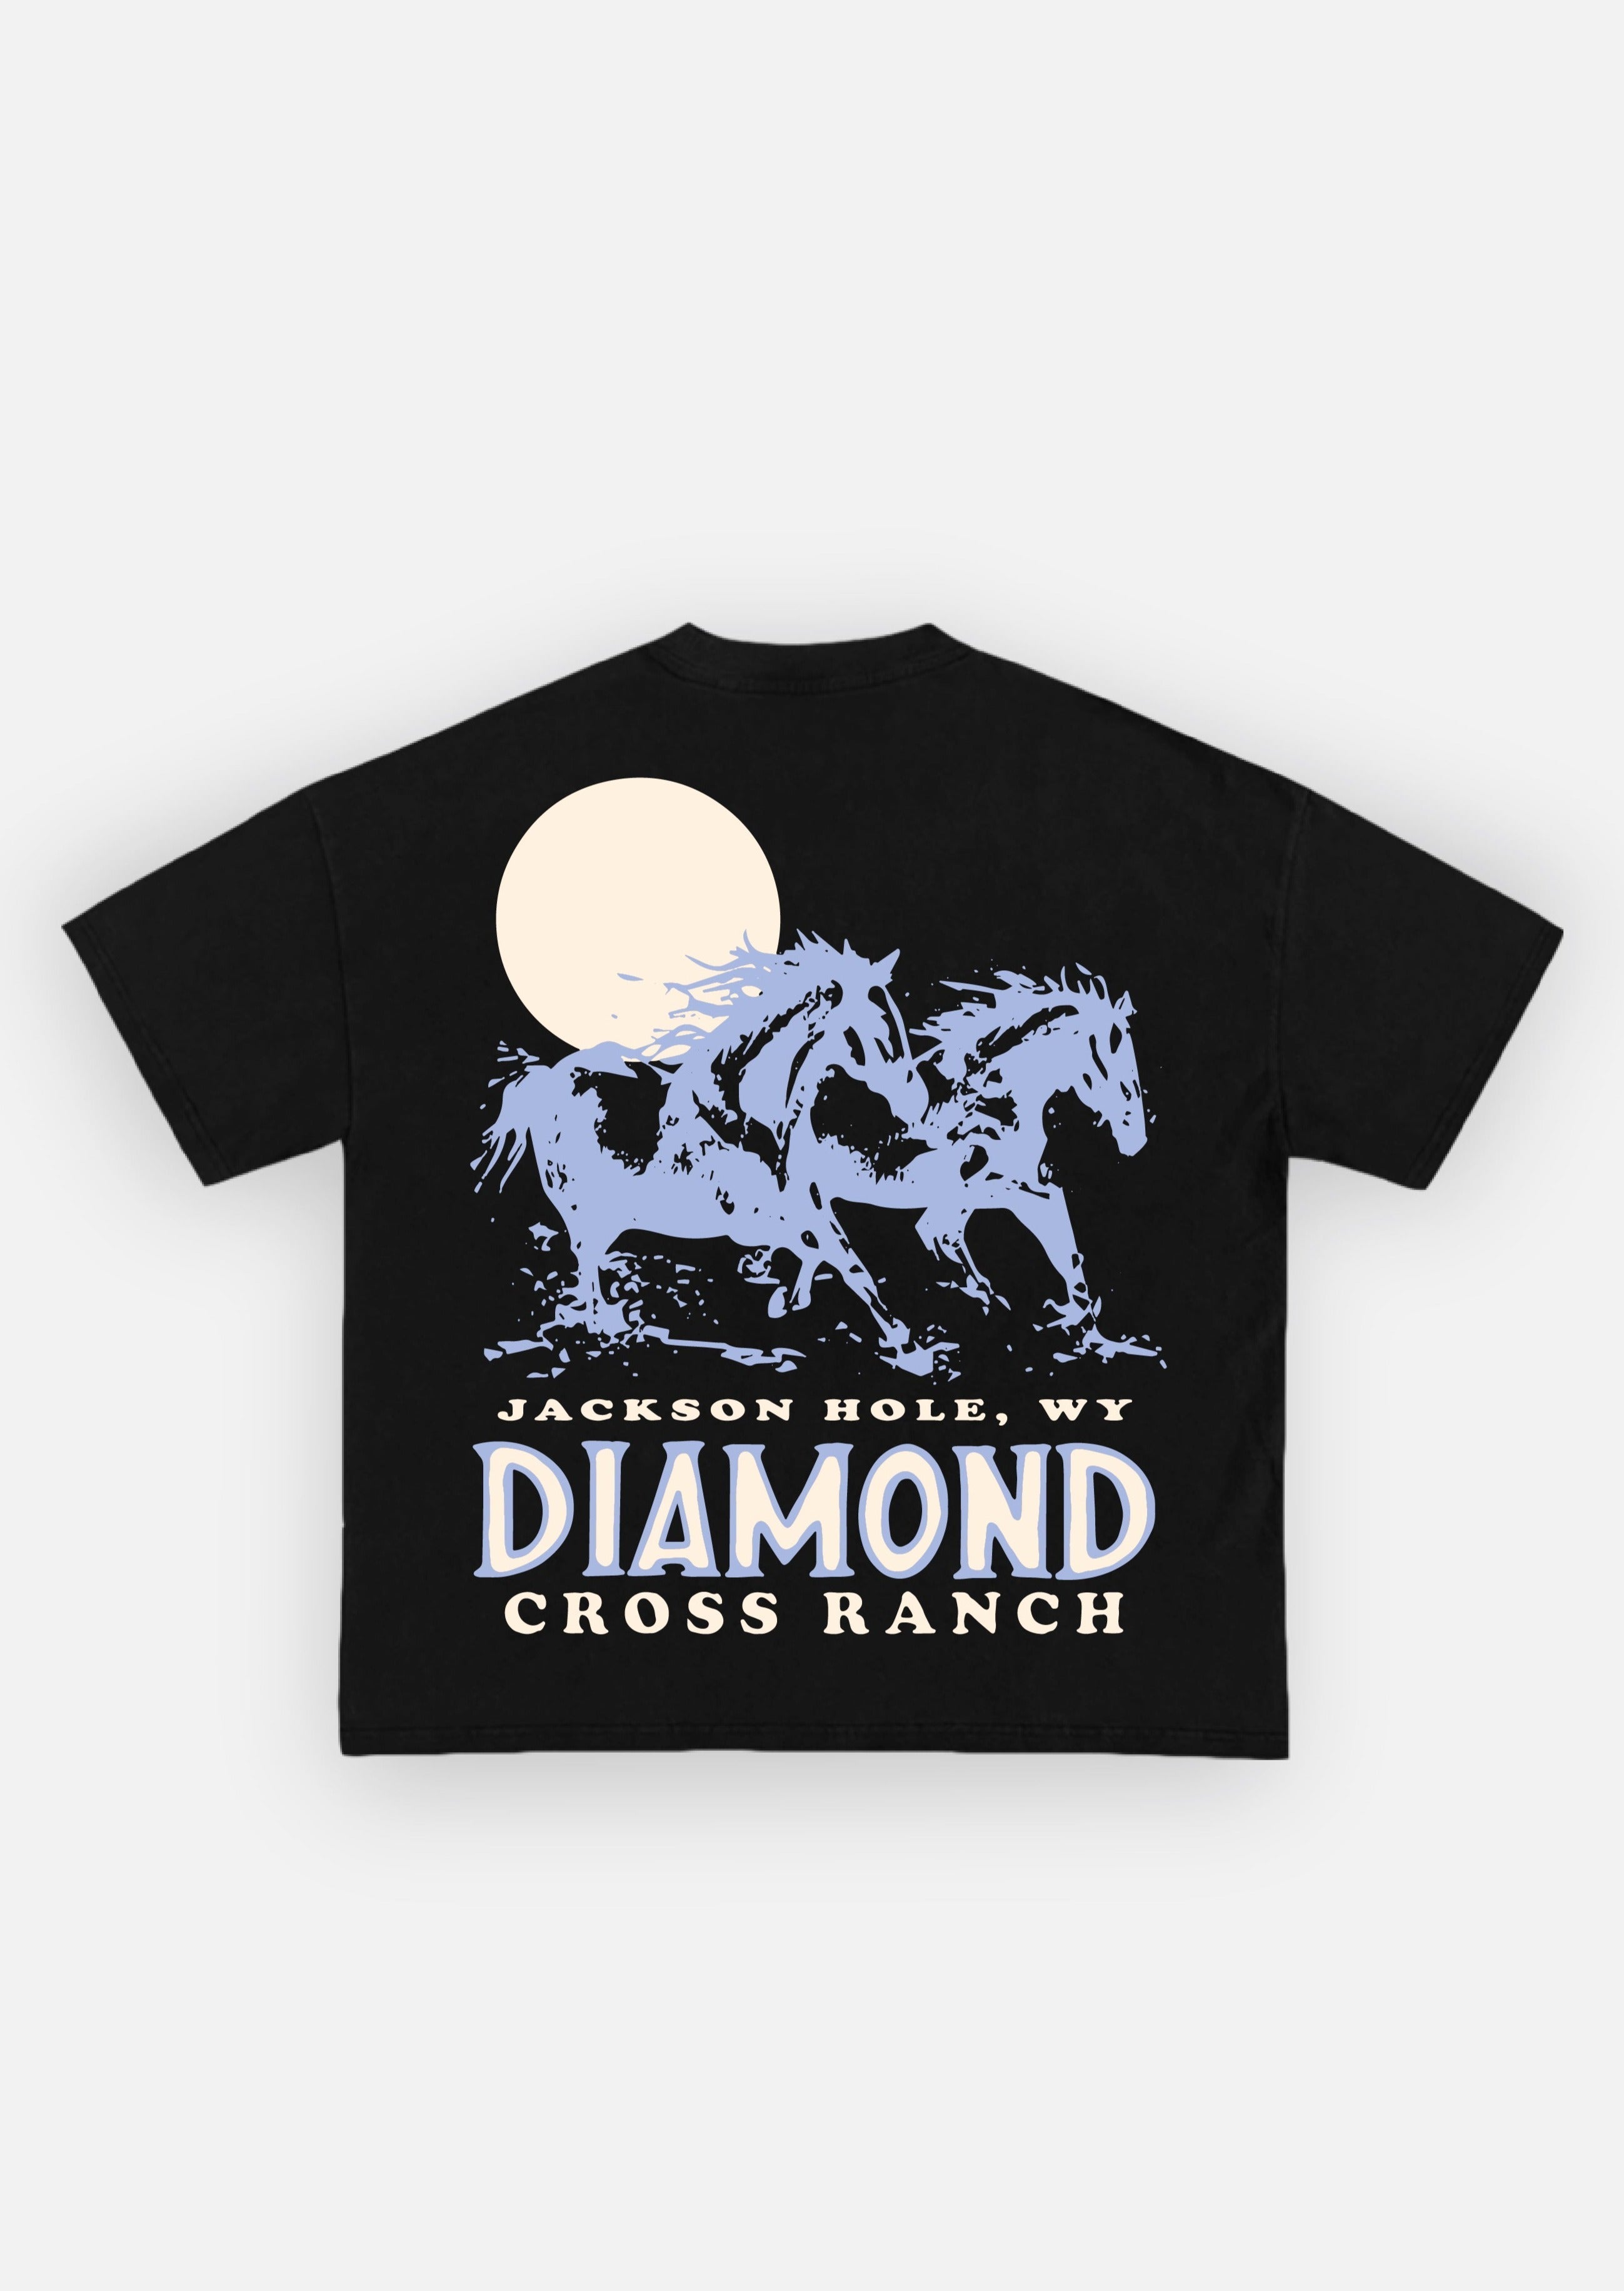 Diamond Cross Ranch Settin Sun (New) Black T-Shirt